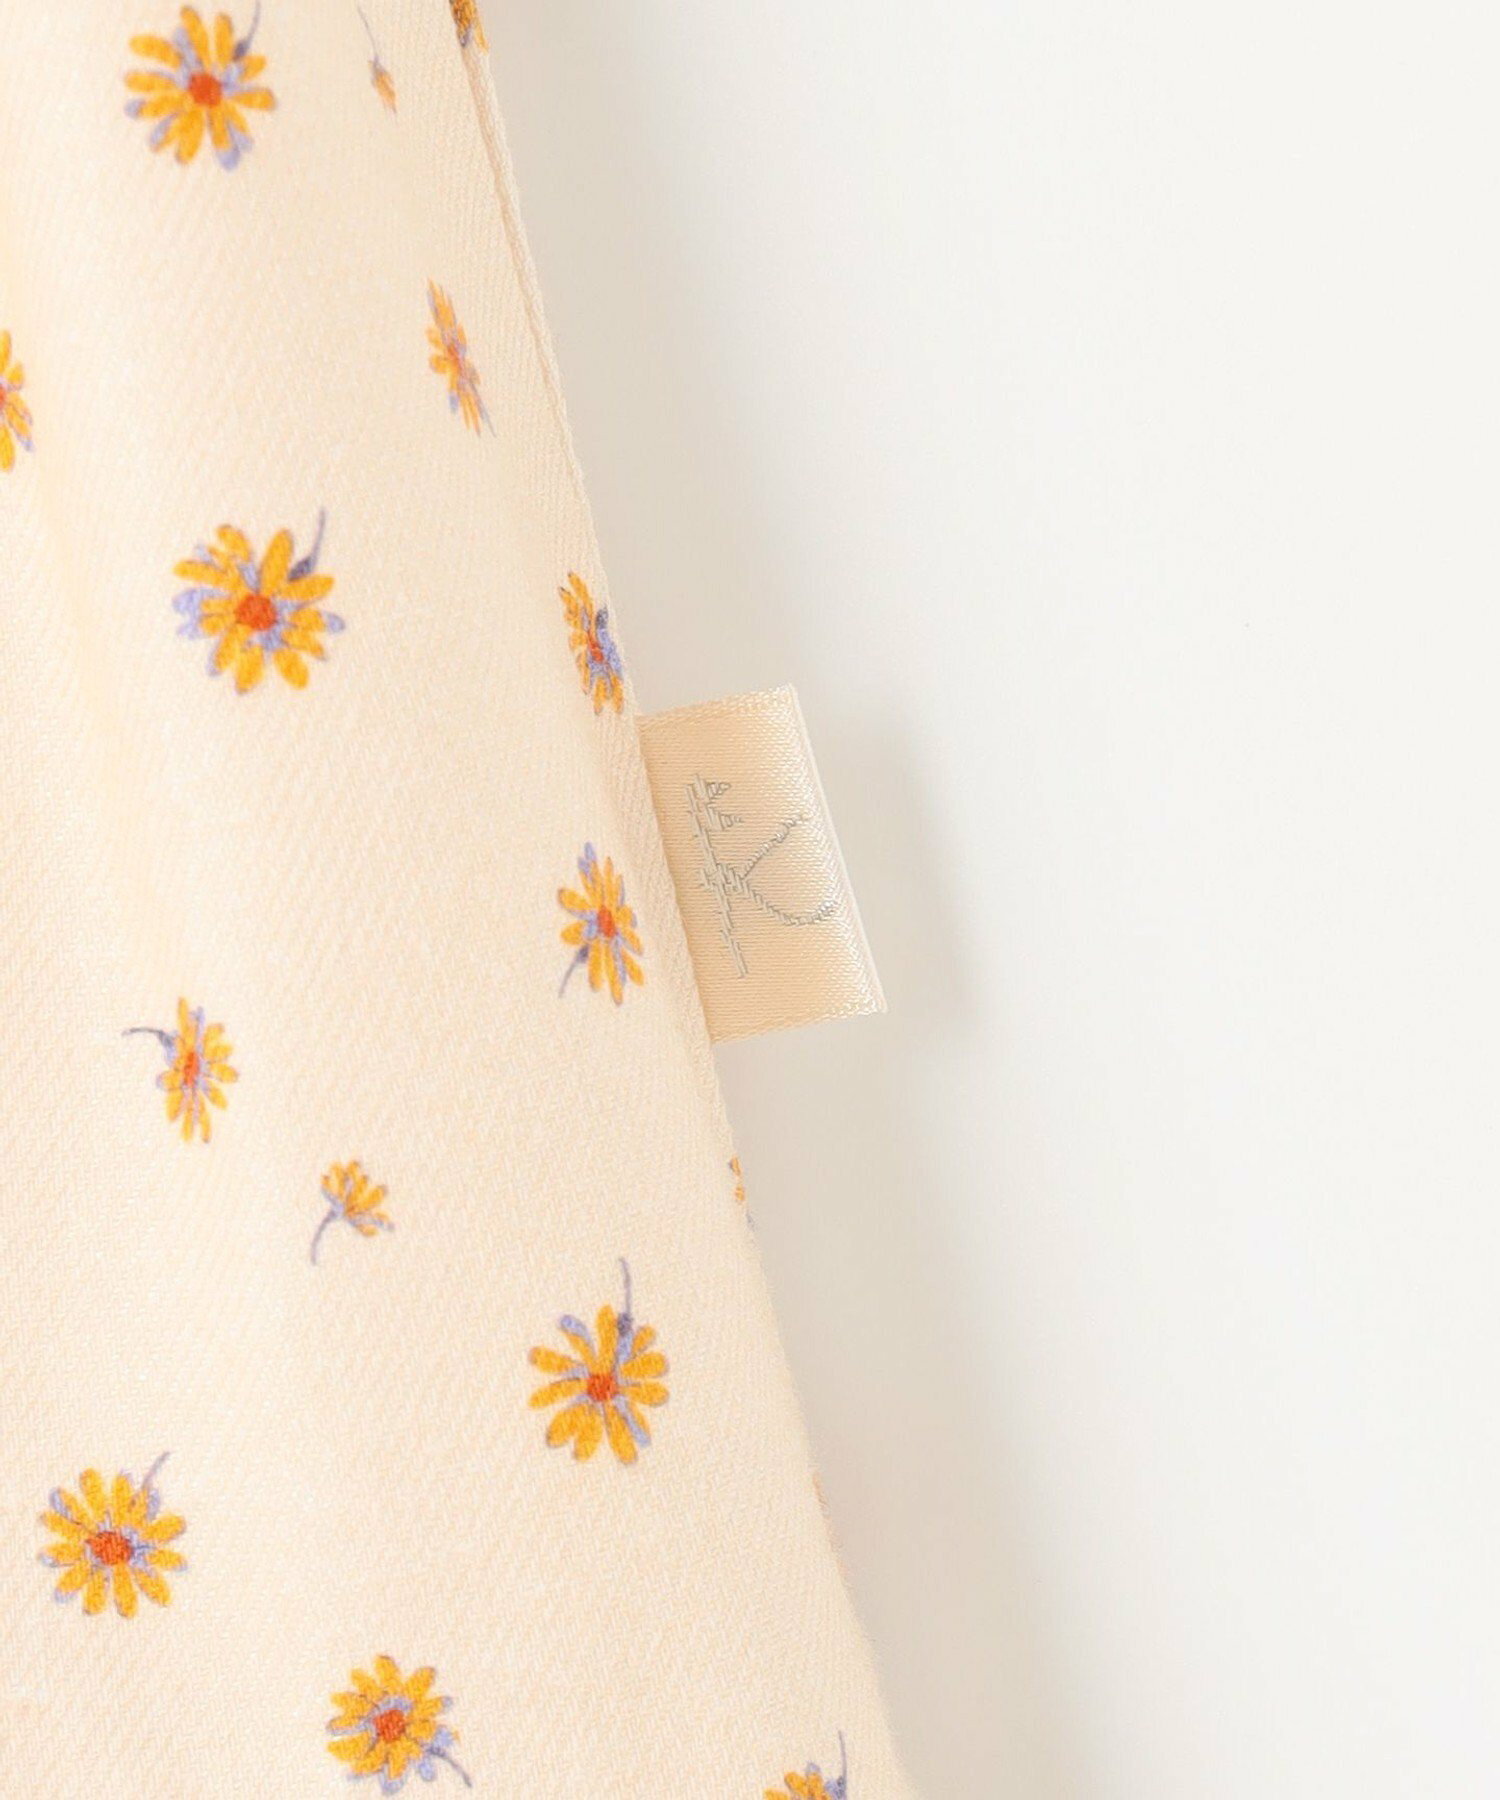 【110-140cm】モノトーン花柄 スカート